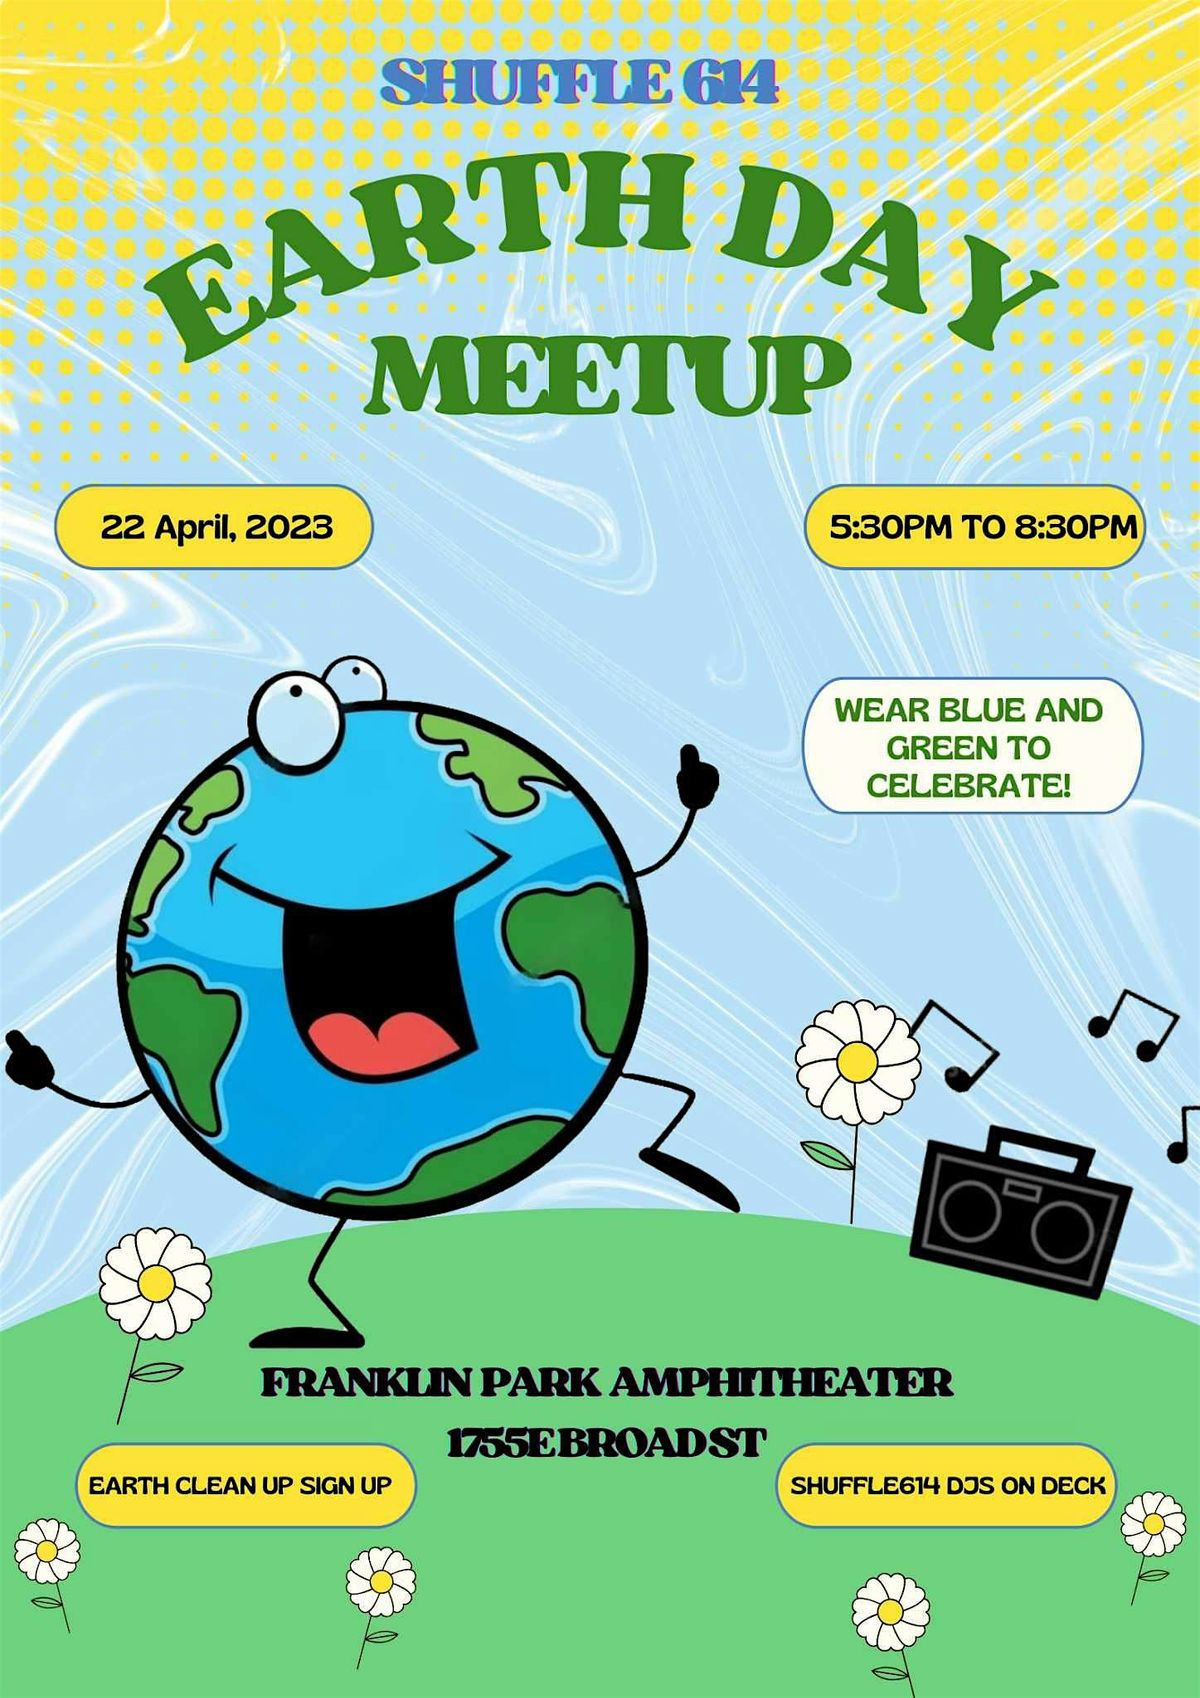 Shuffle 614 Earth Day Meetup